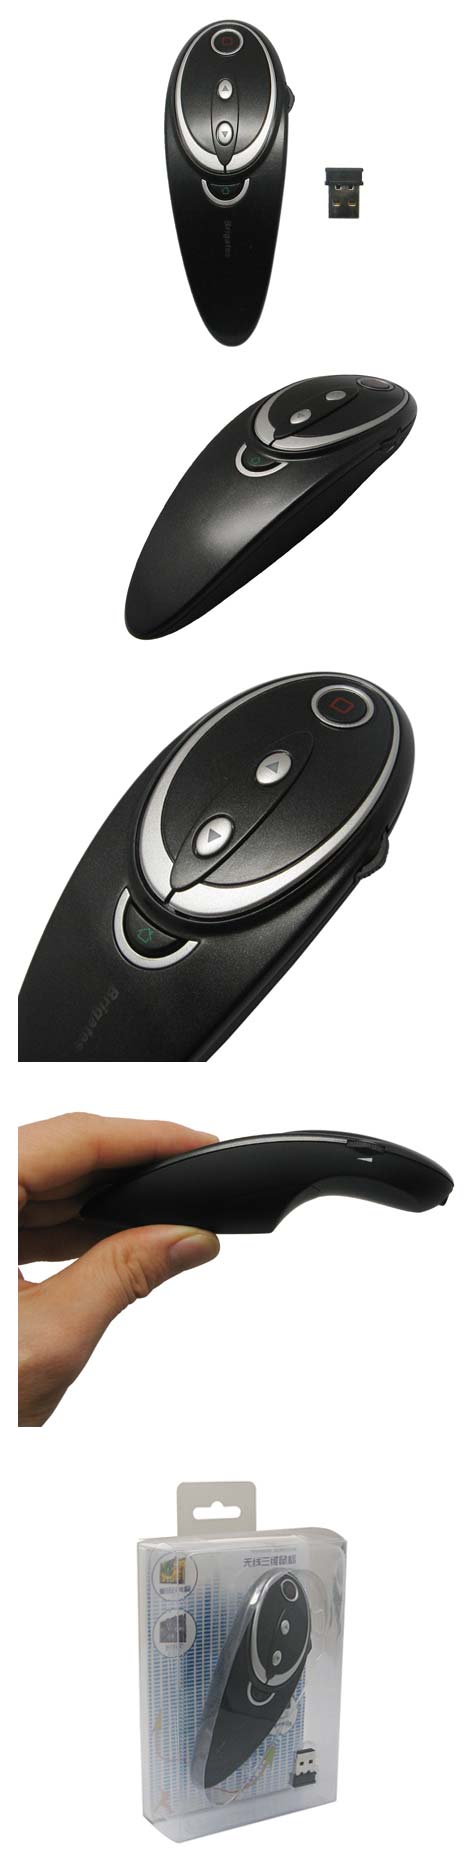 Устройство Brigates Wireless 3D Air Mouse